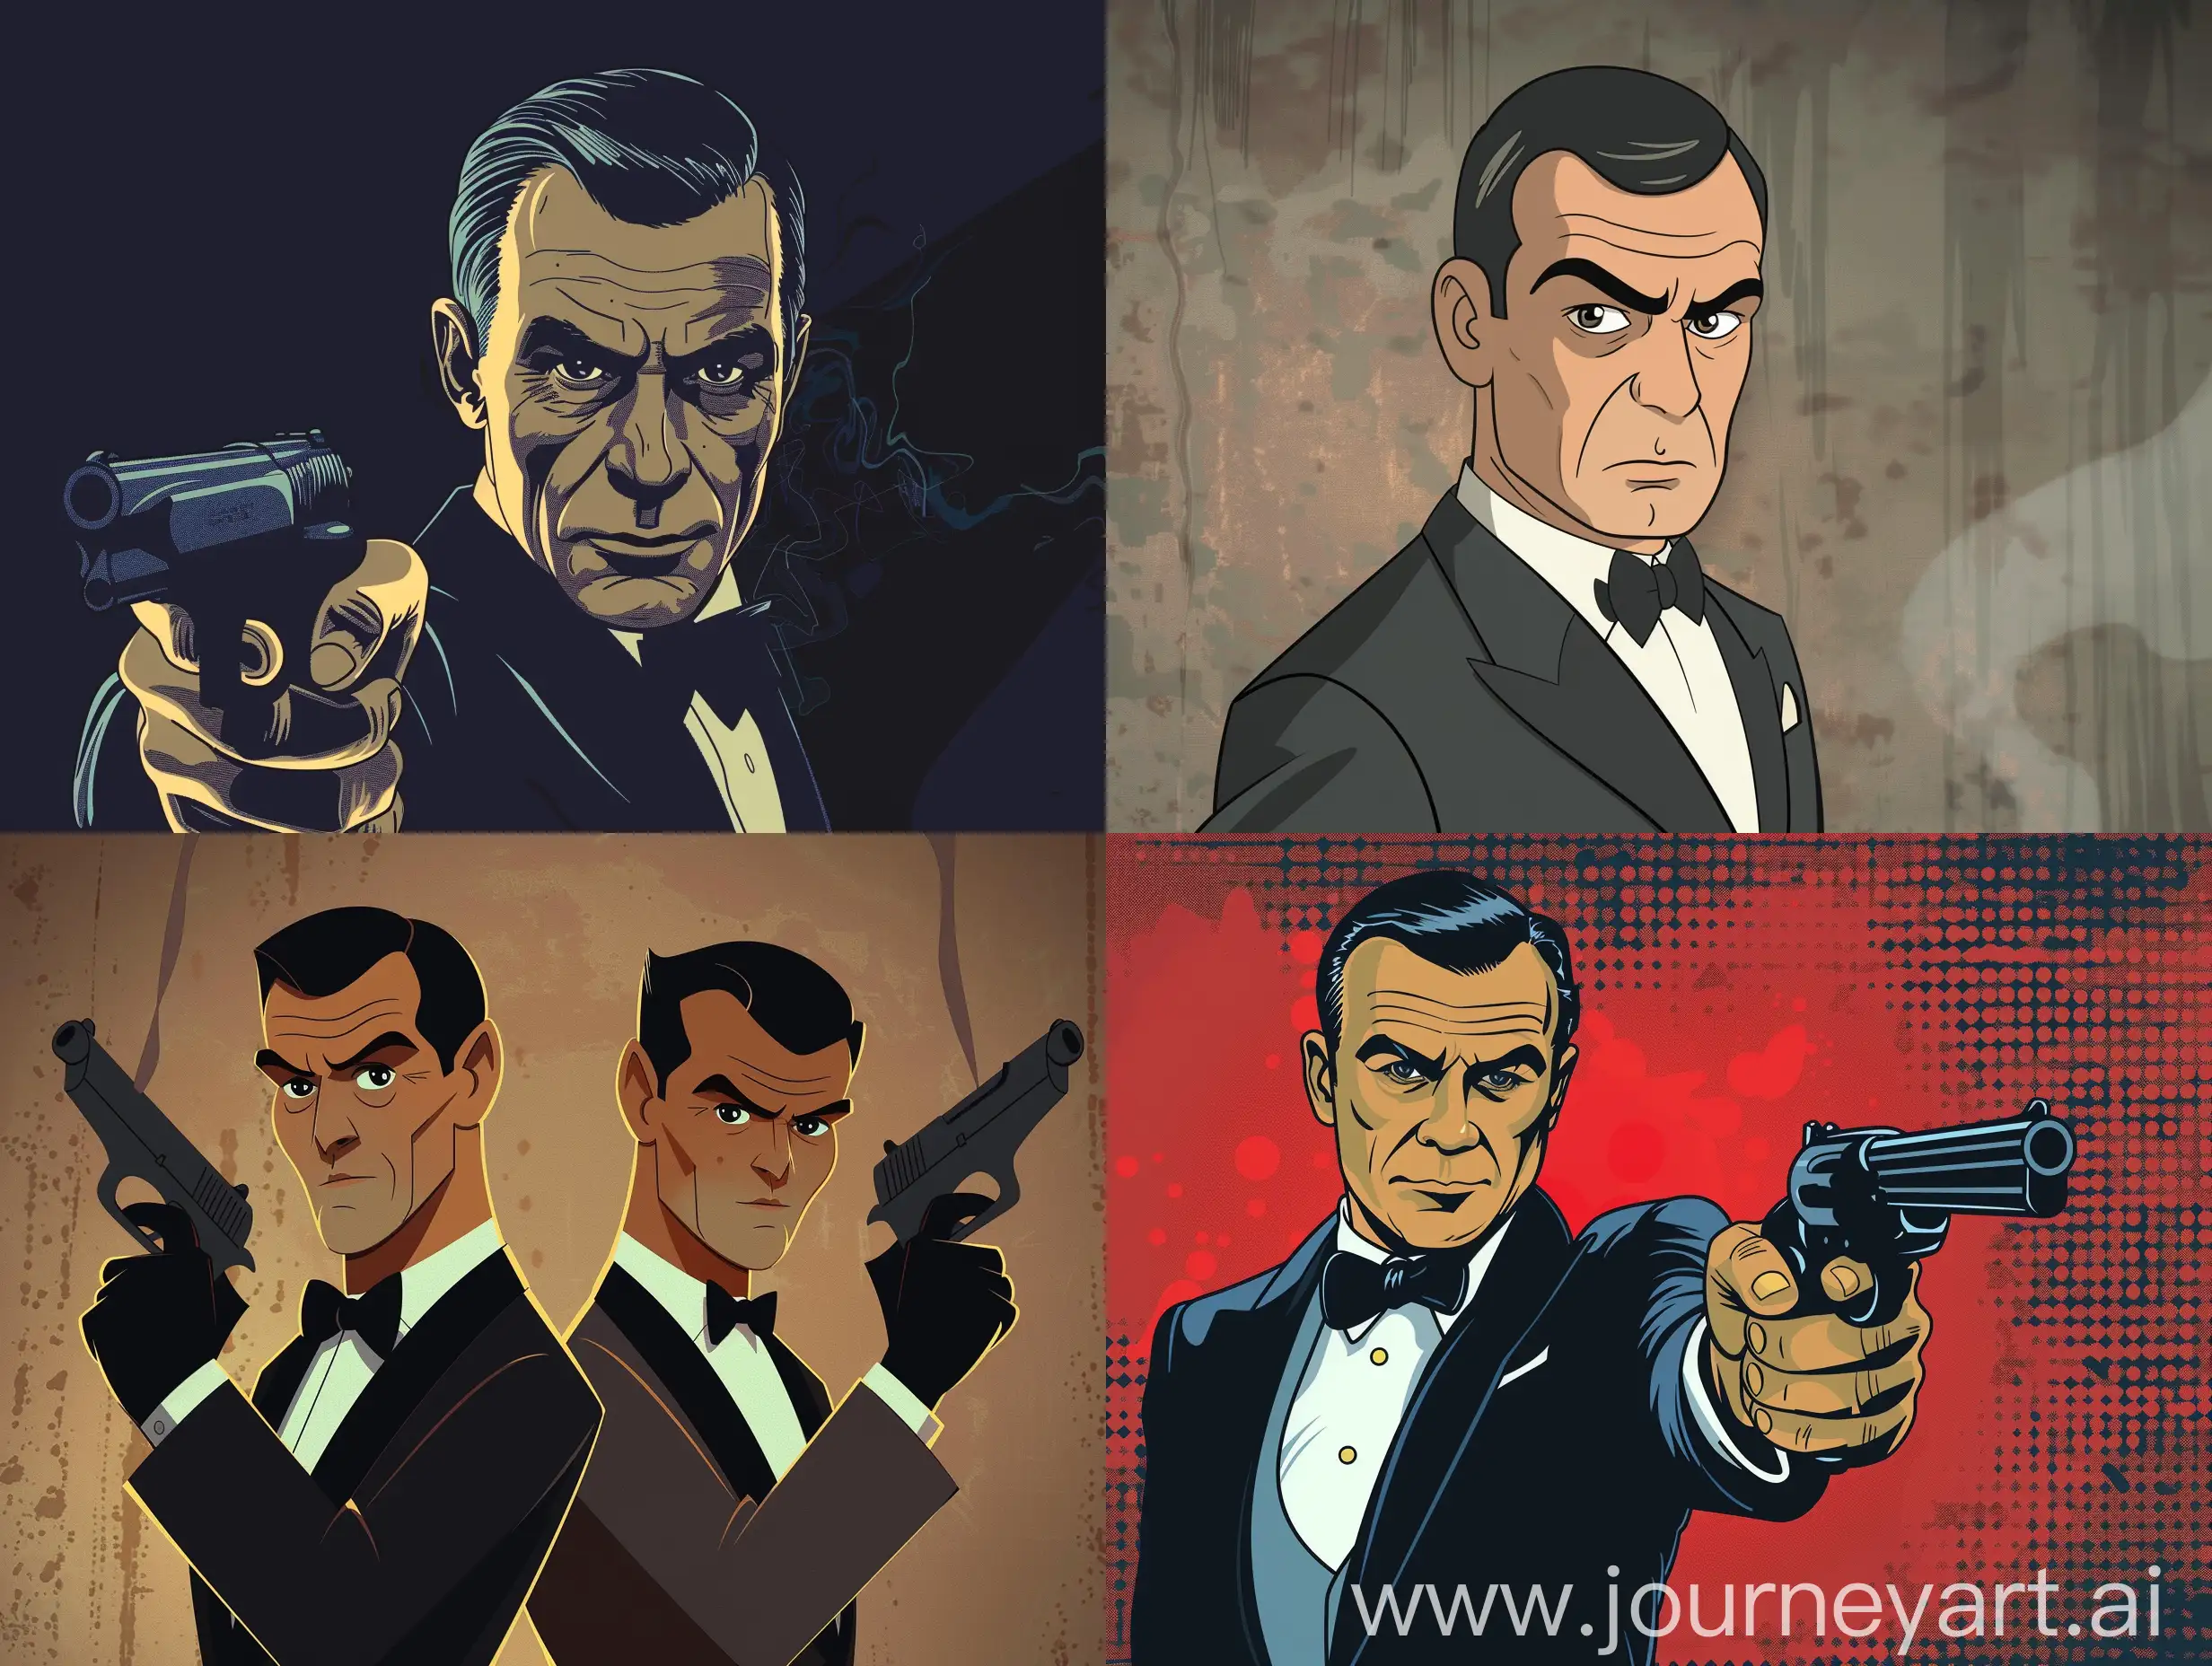 Vintage-1960s-James-Bond-Art-in-Batman-The-Animated-Series-Style